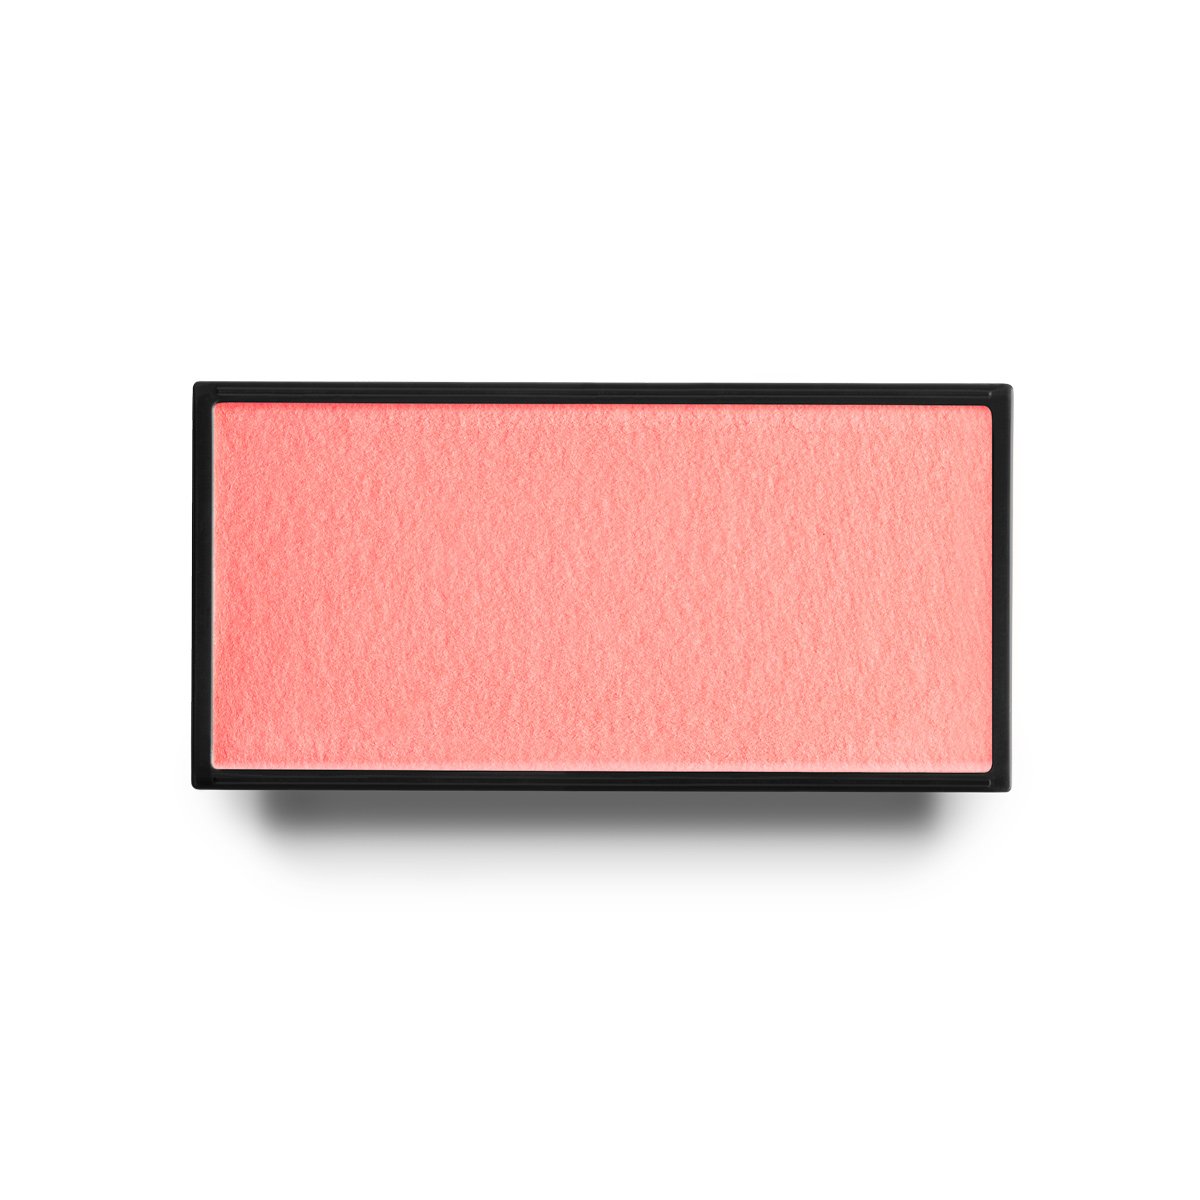 PARFAIT - MATTE PINKY CORAL - matte finish powder blush in pink coral shade